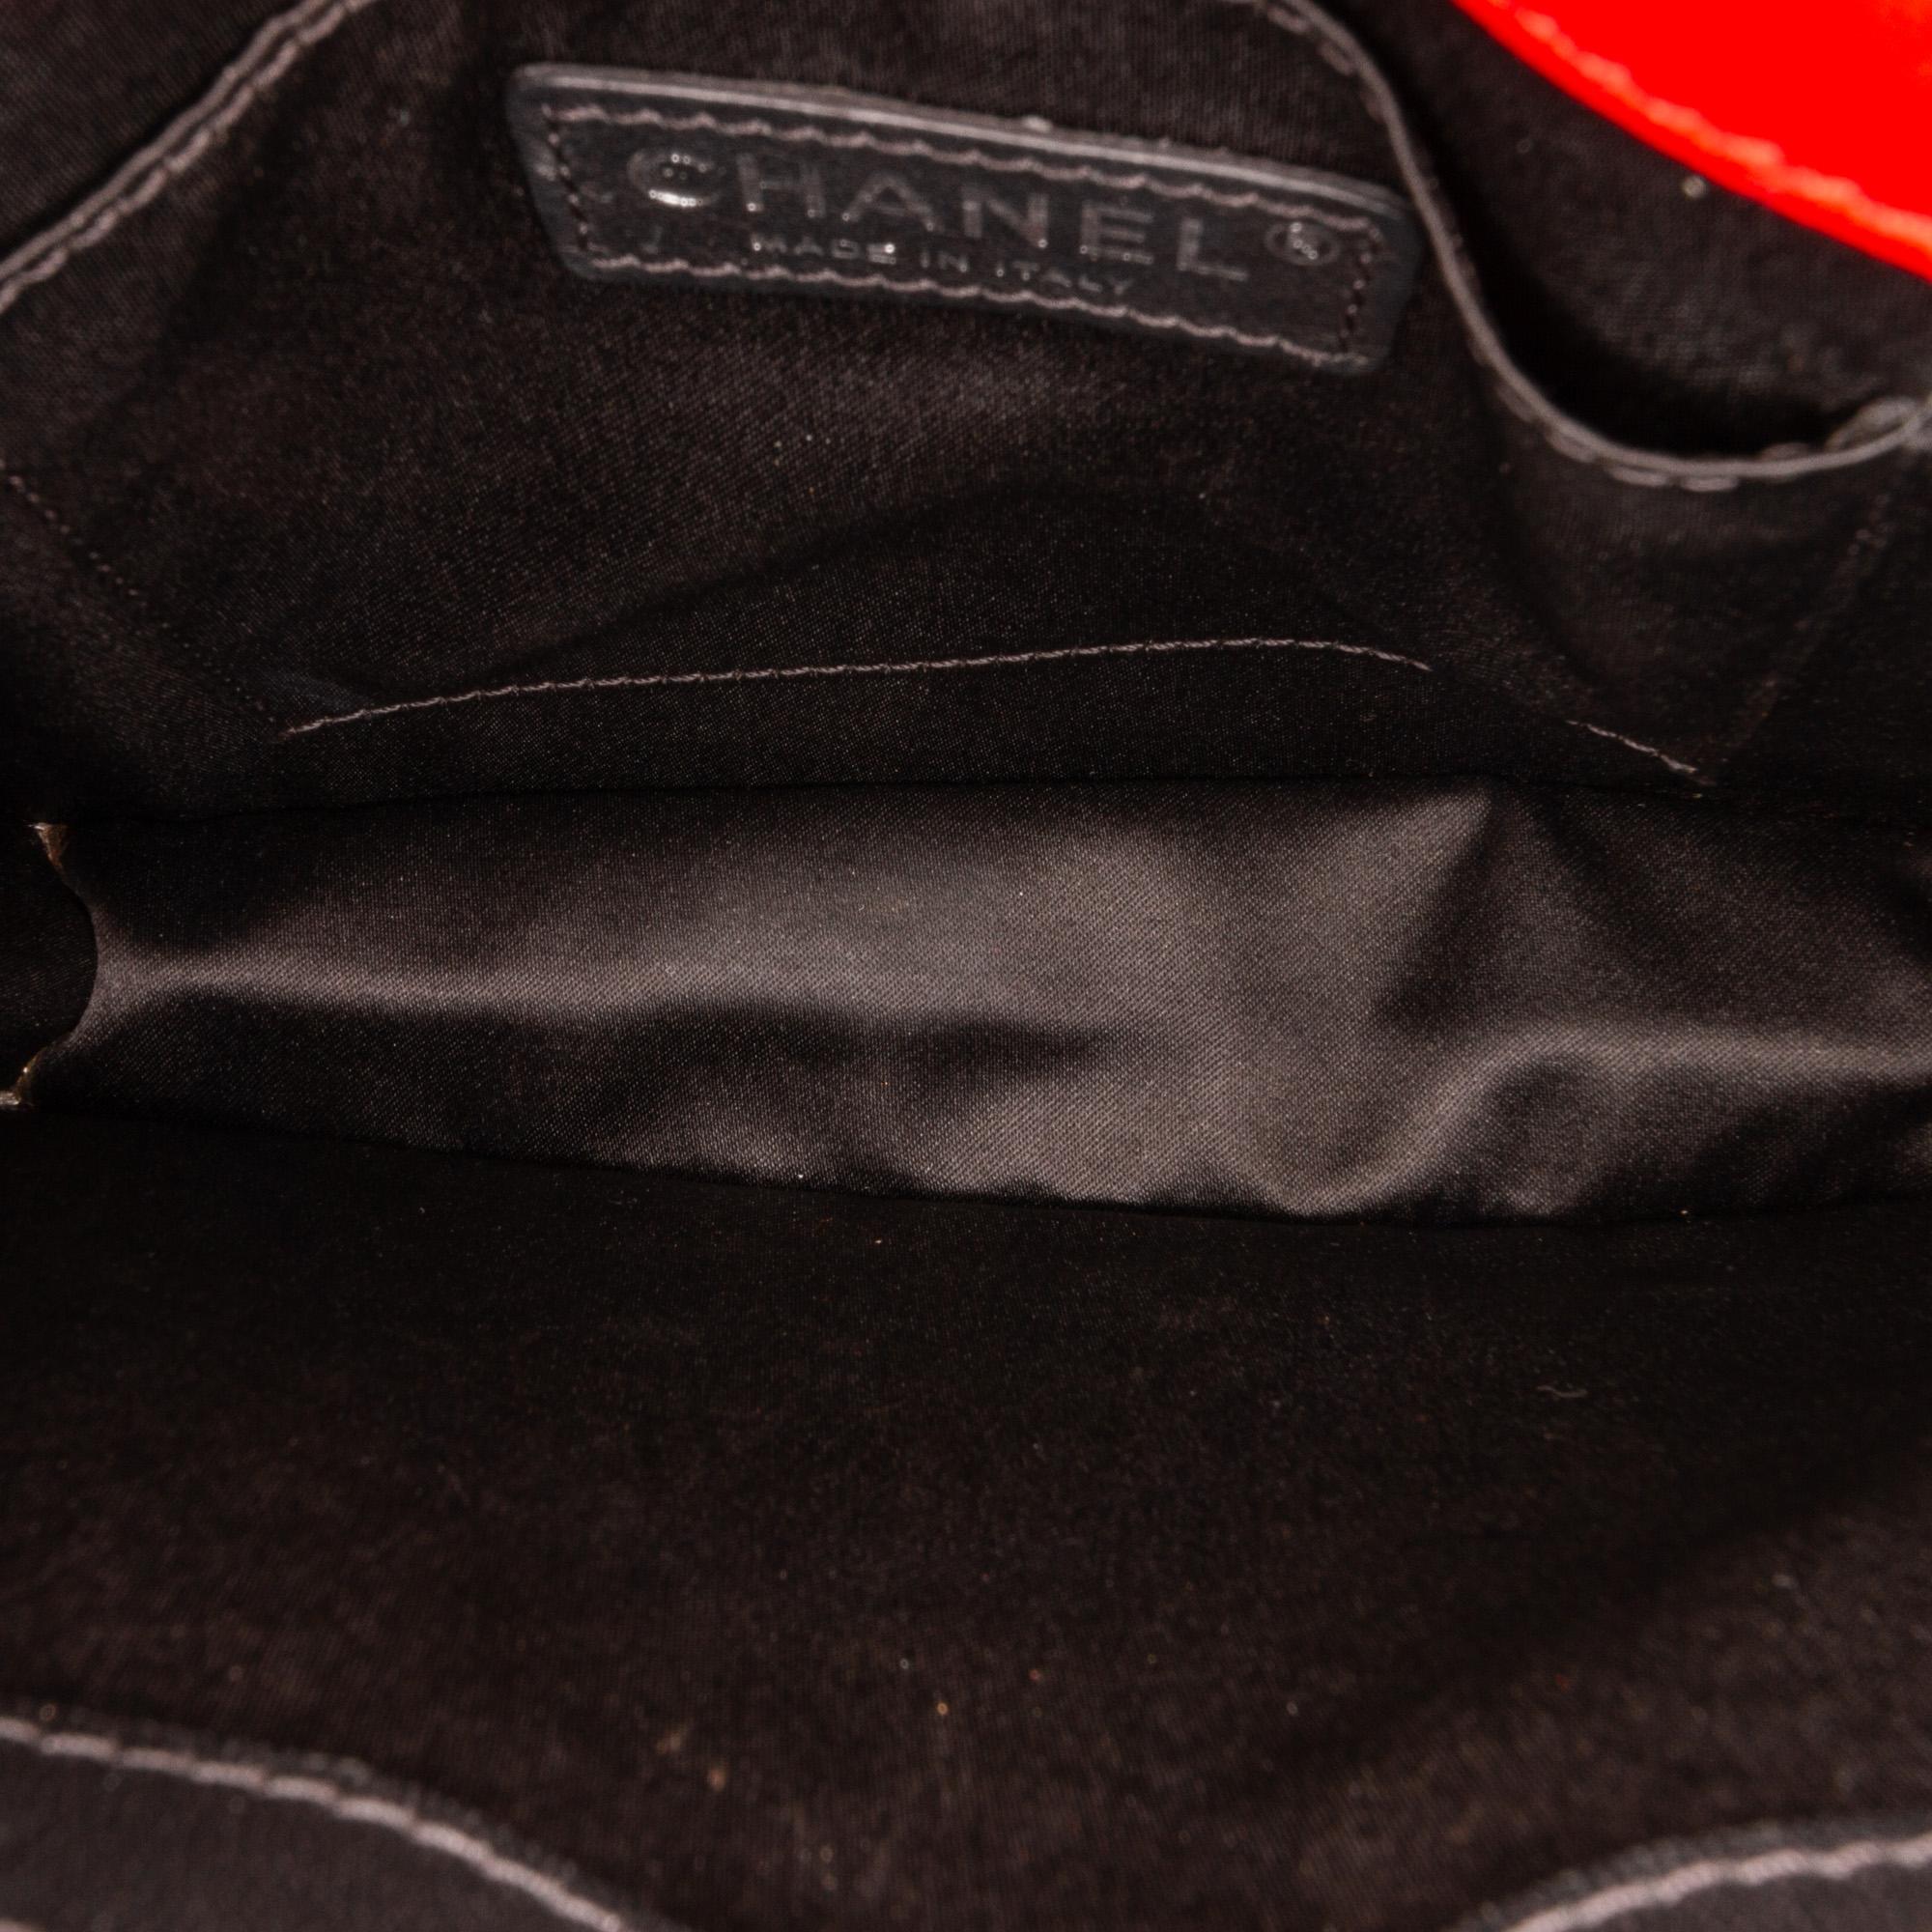 Chanel Black/Red Mini Square Graphic Flap Crossbody Bag